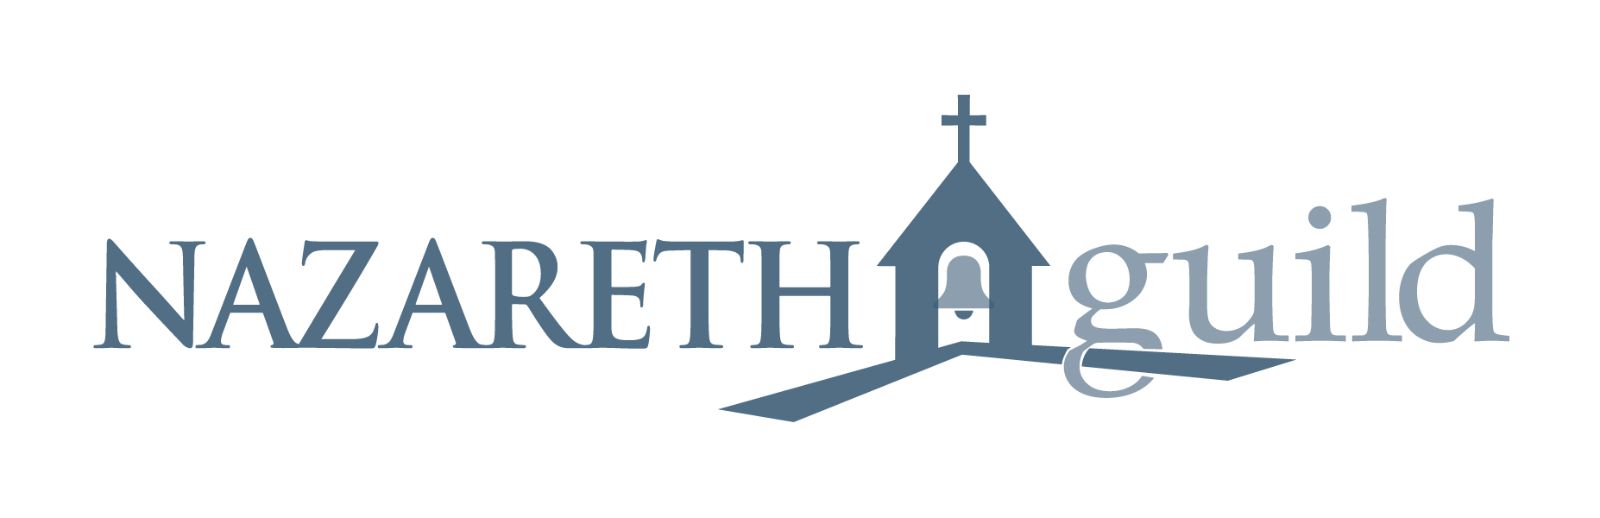 Nazareth_Guild_Logo(1).jpg